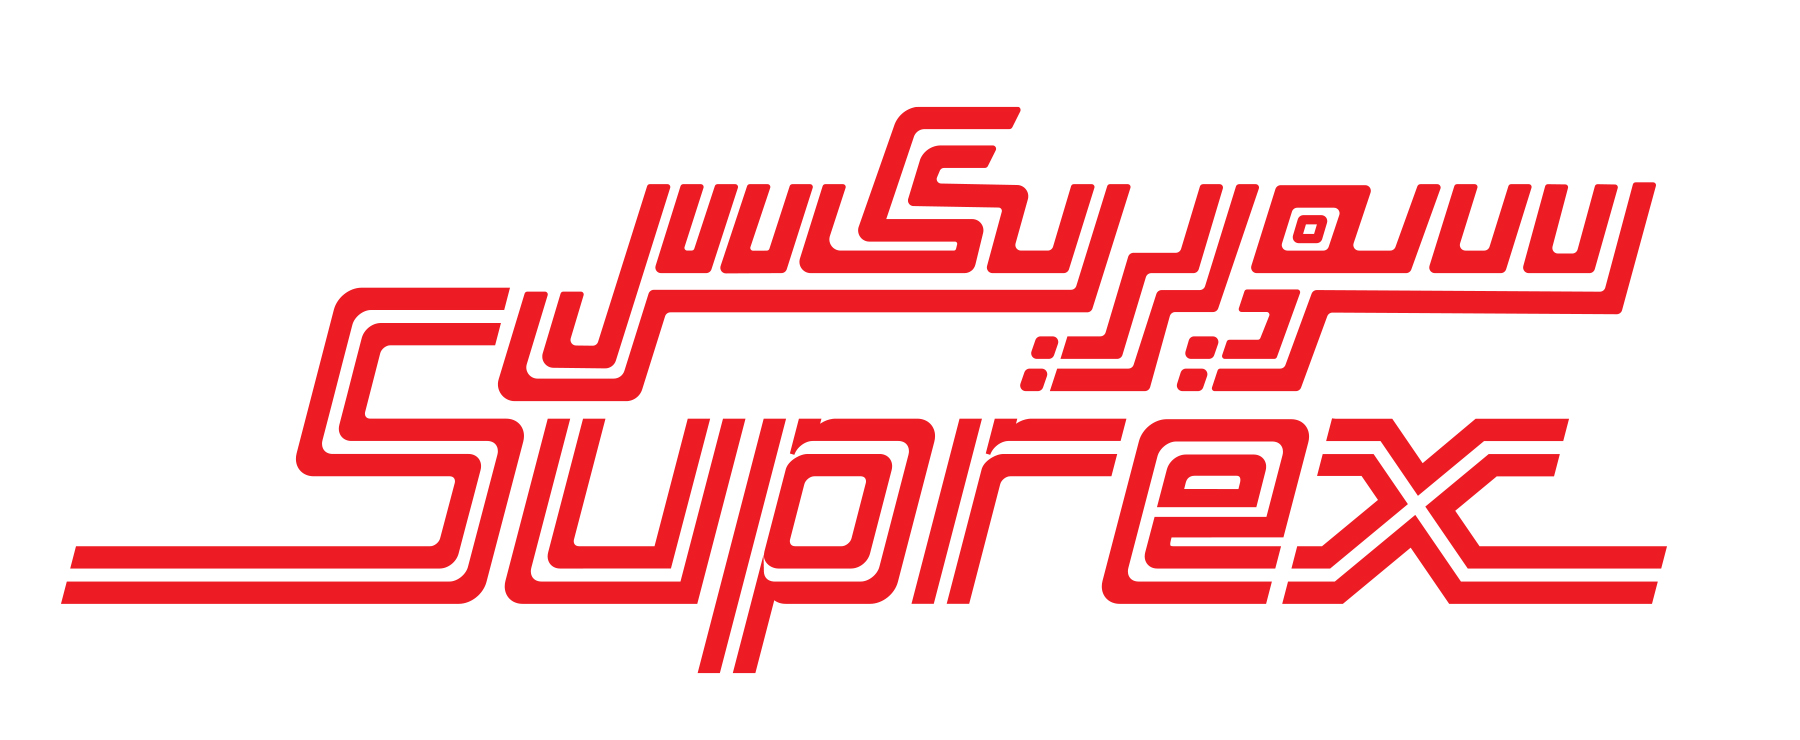 Suprex brand logo